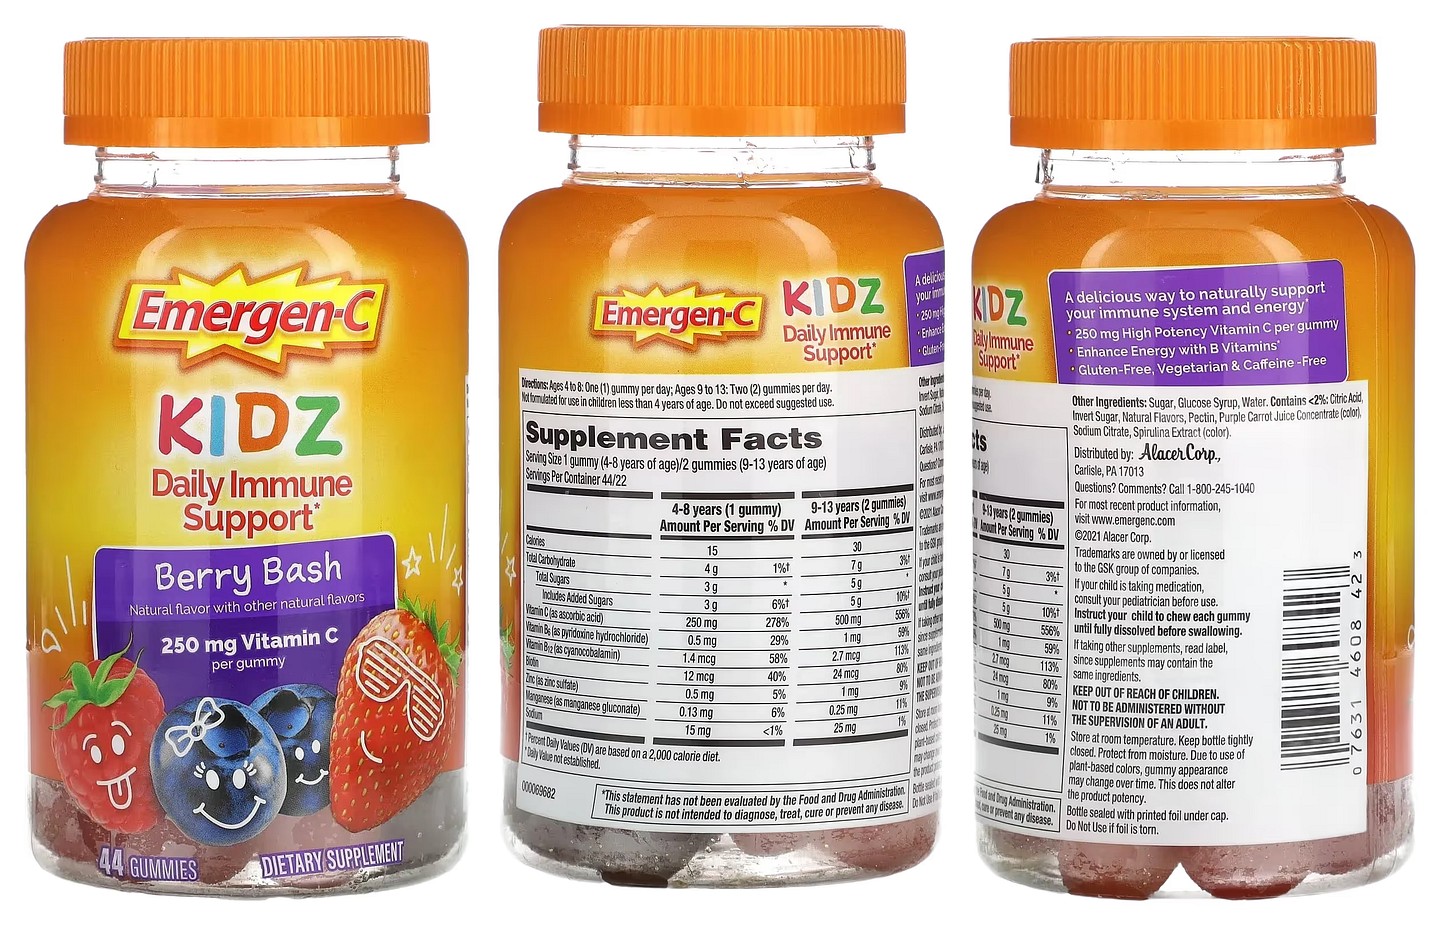 Emergen-C, Kidz Daily Immune Support, Berry Bash packaging